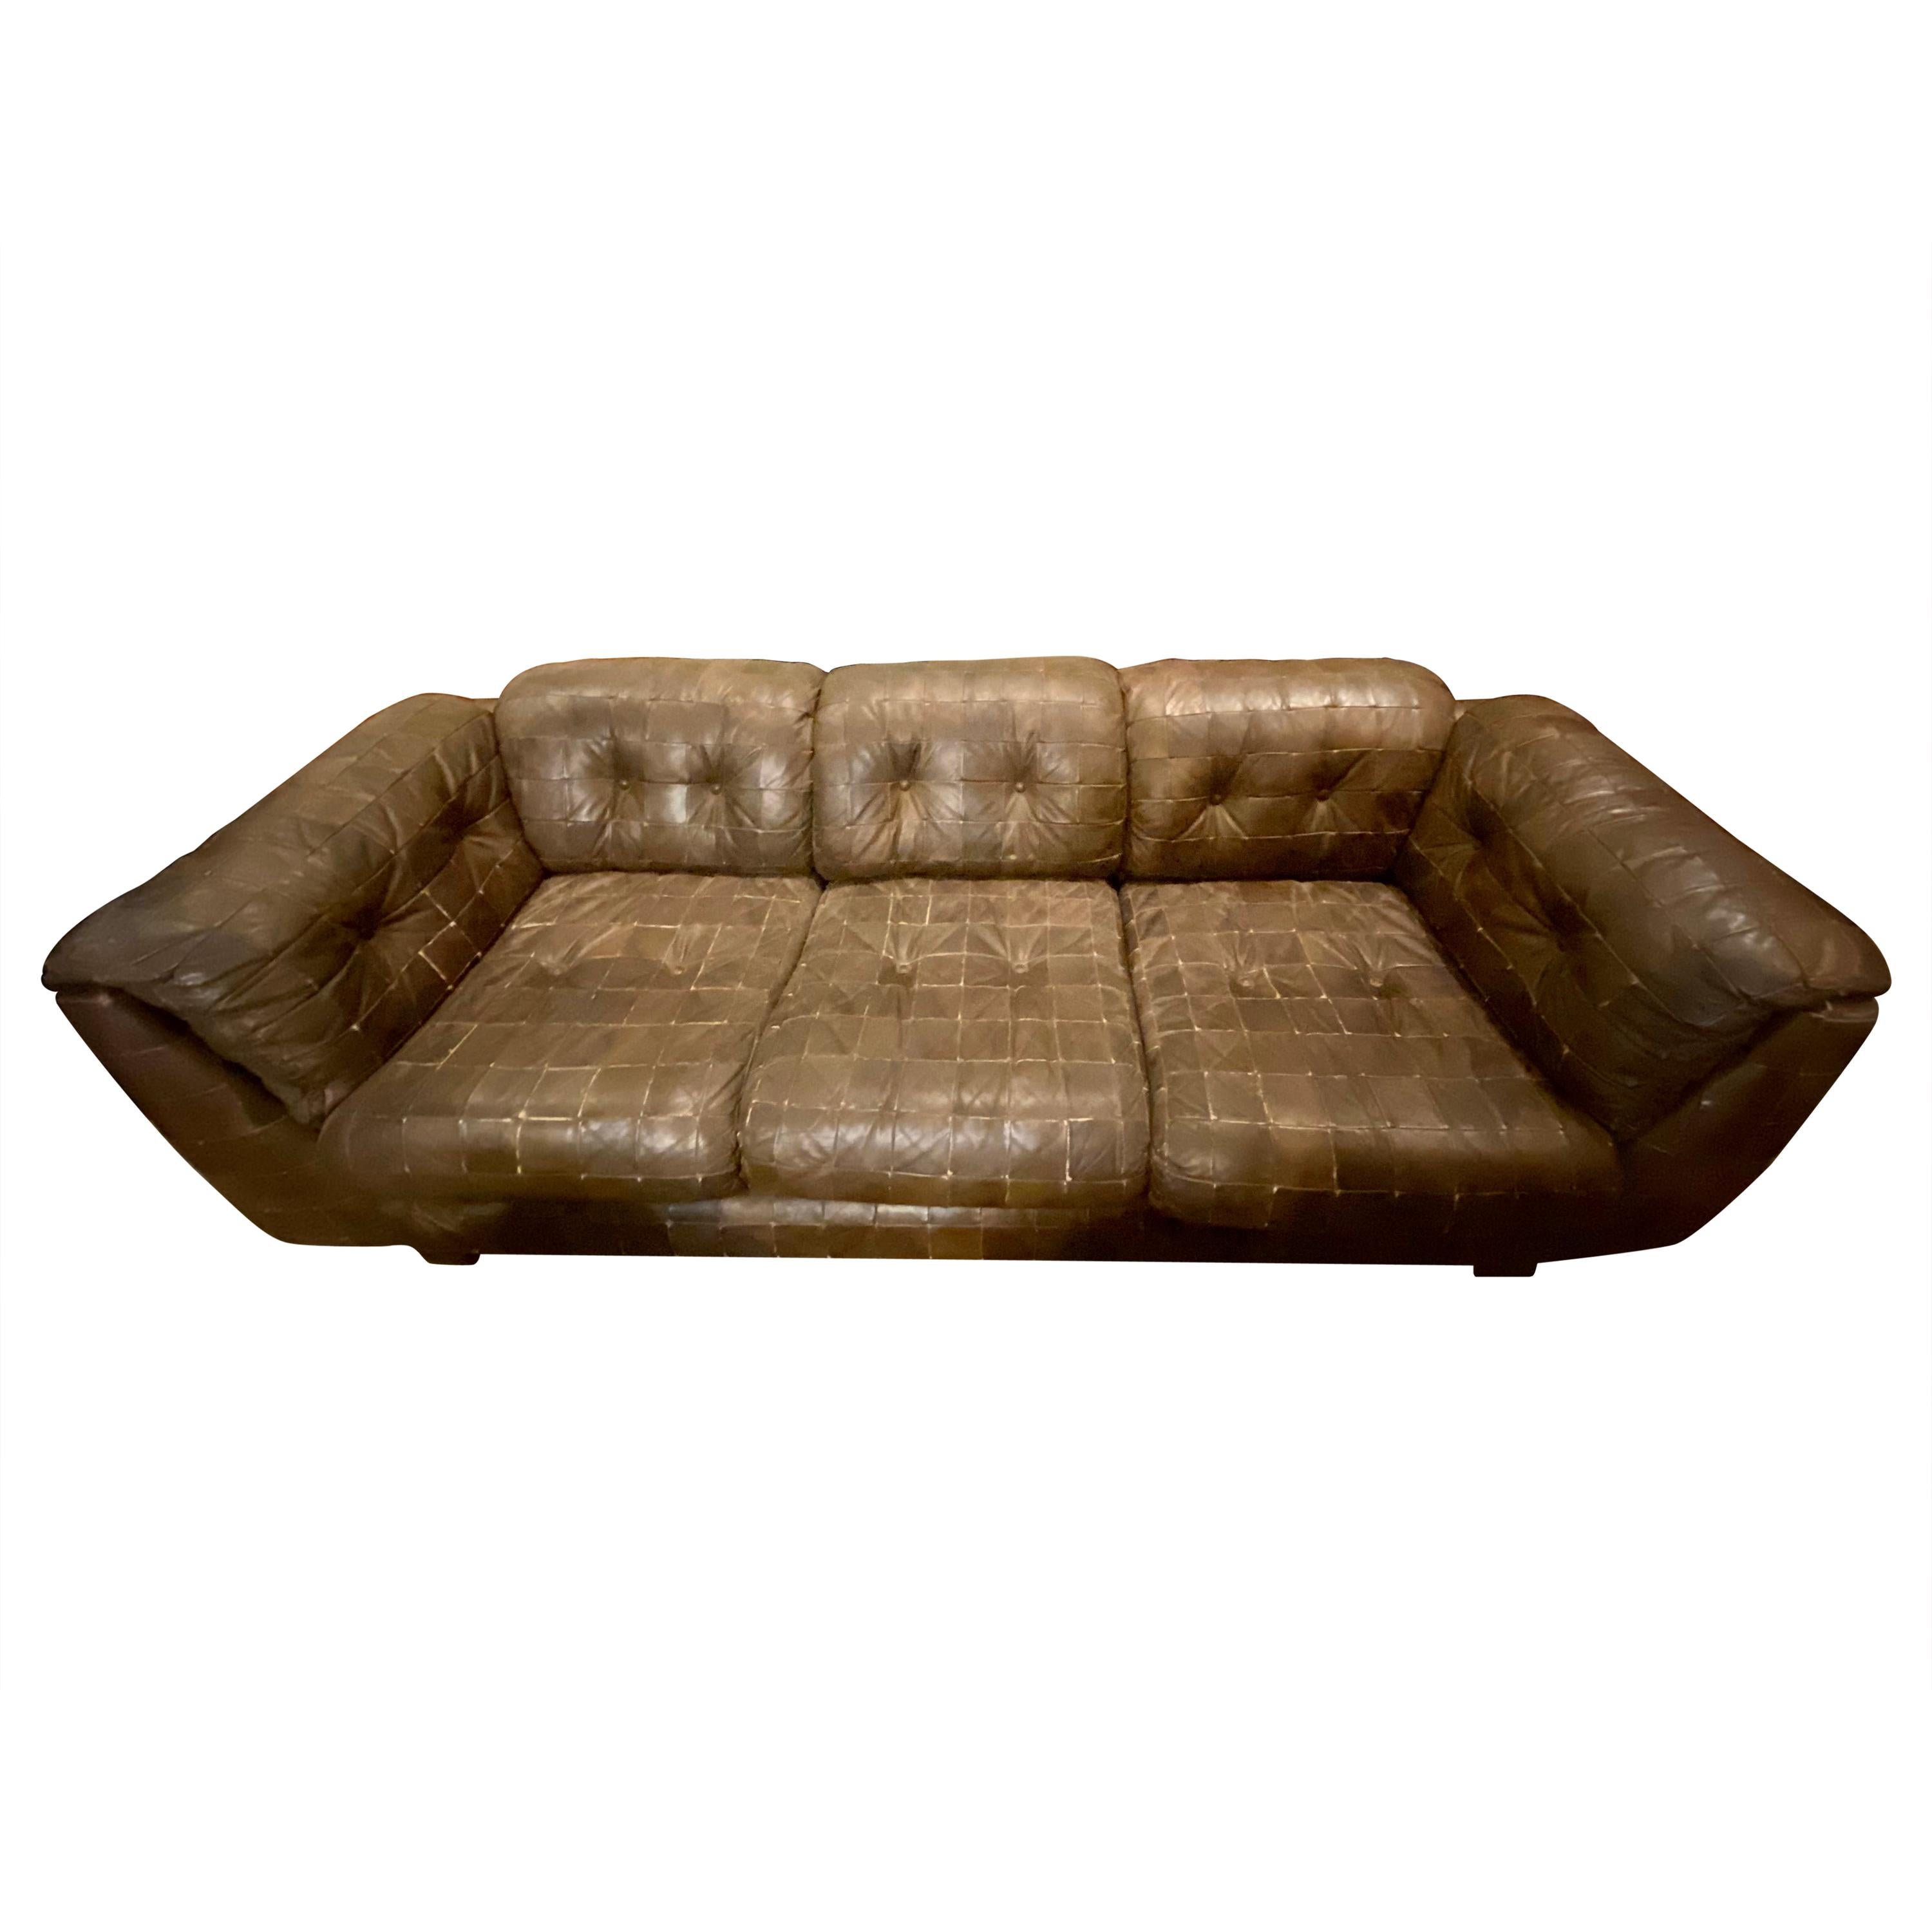 Vintage Leather Patchwork Sofa For Sale